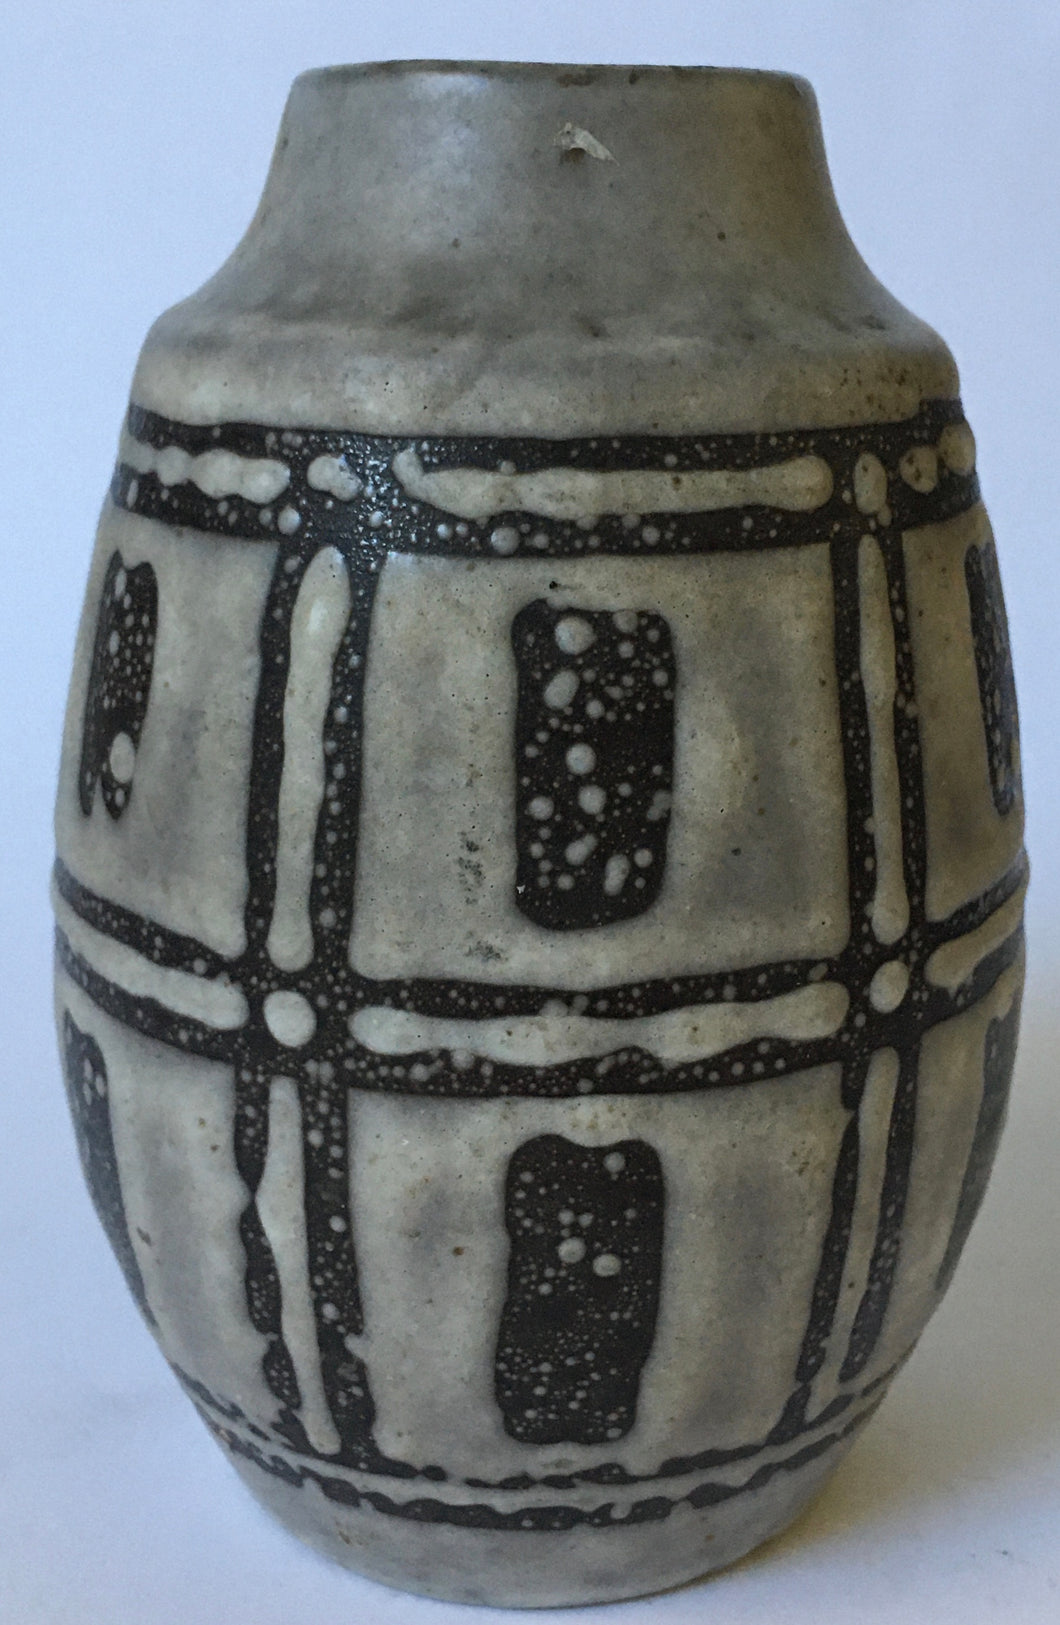 Jasba Keramik Germany Wax Resist decoration - shape 119/15 Vase West German Pottery mid century Modern